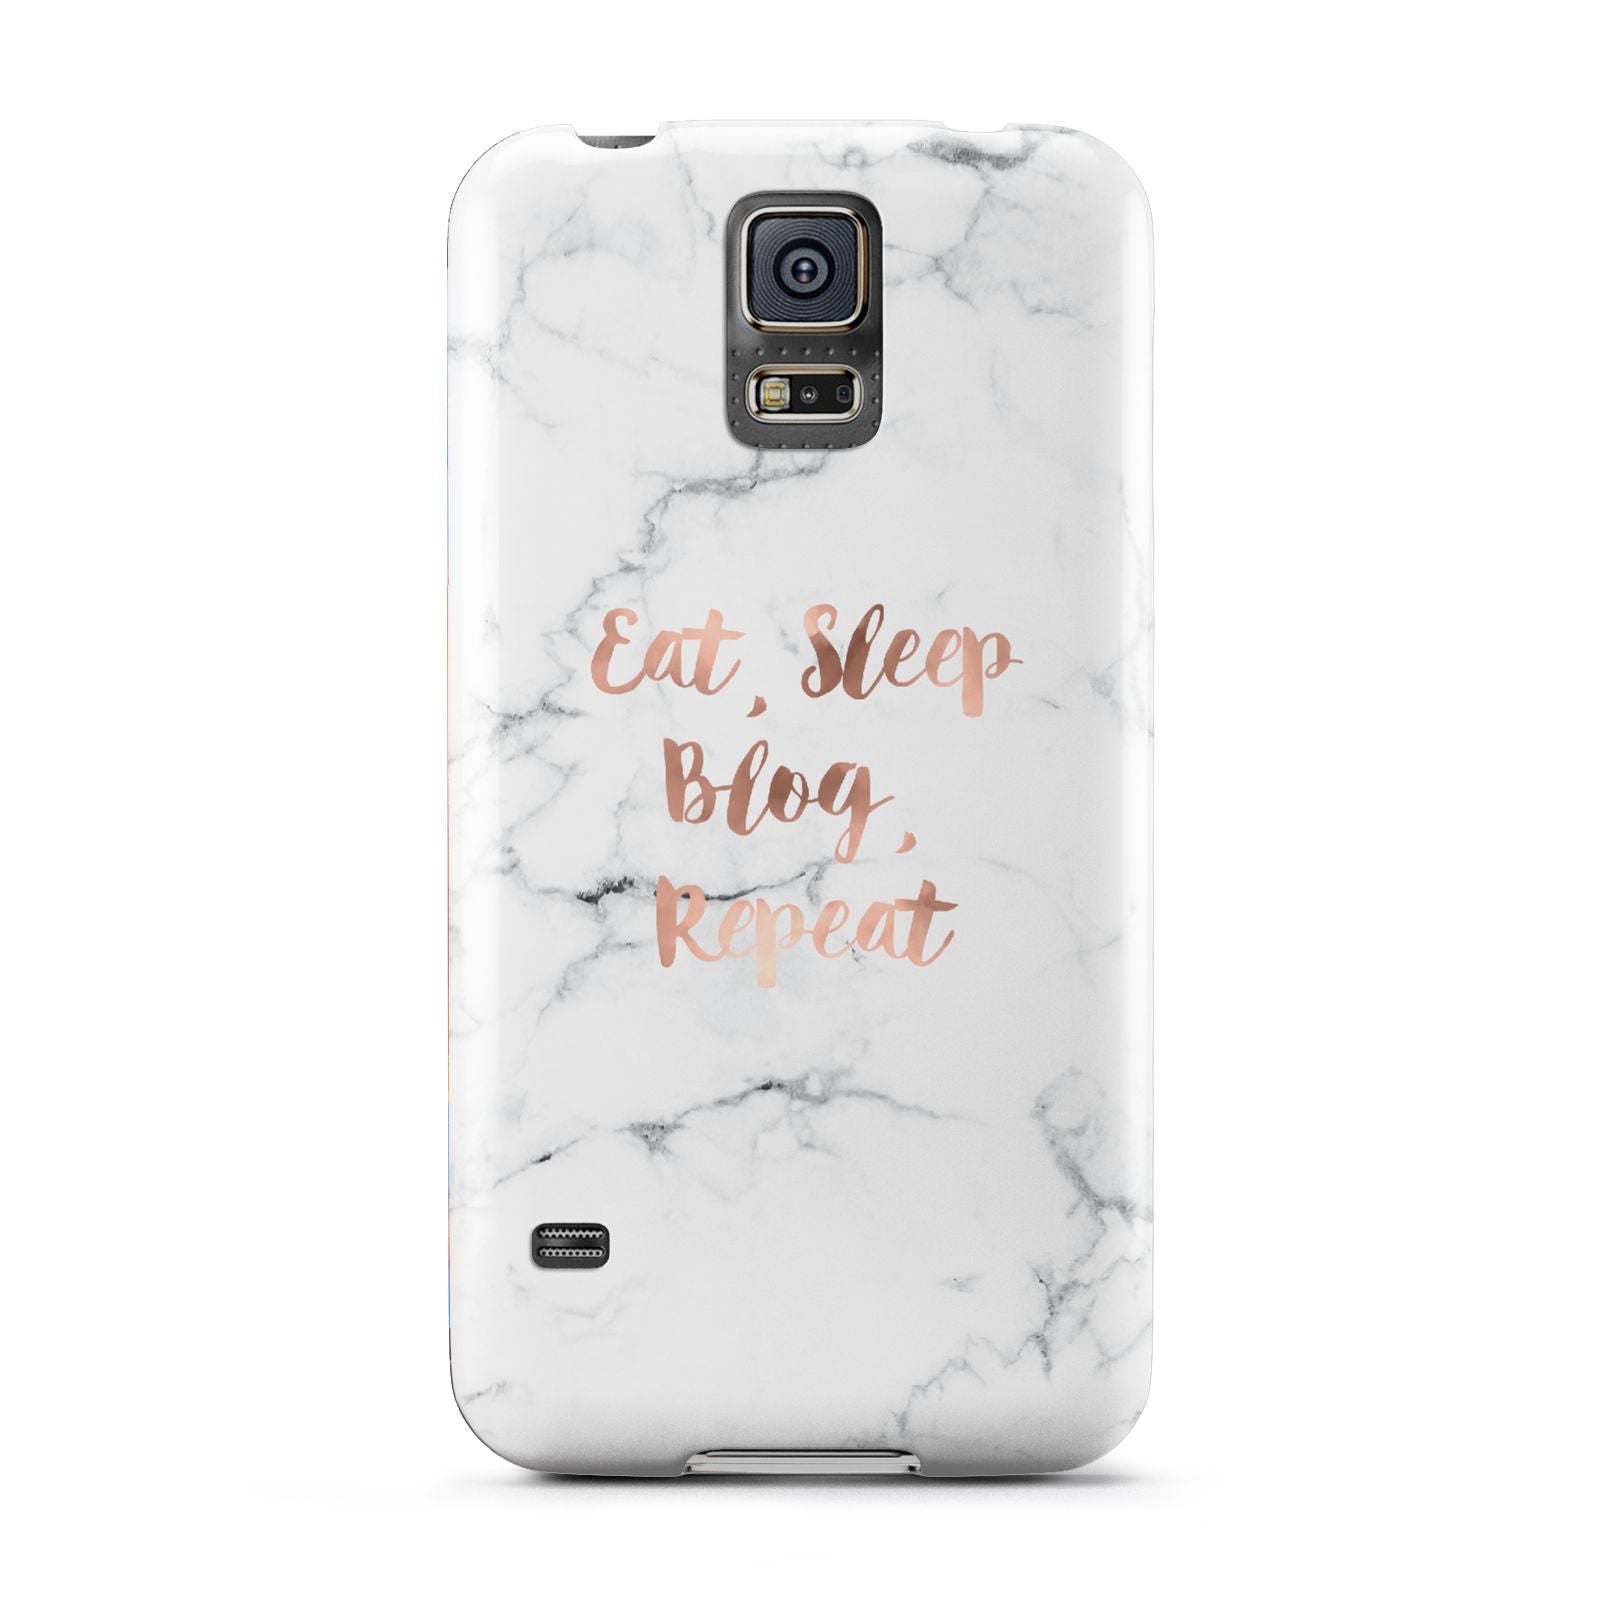 Eat Sleep Blog Repeat Marble Effect Samsung Galaxy S5 Case